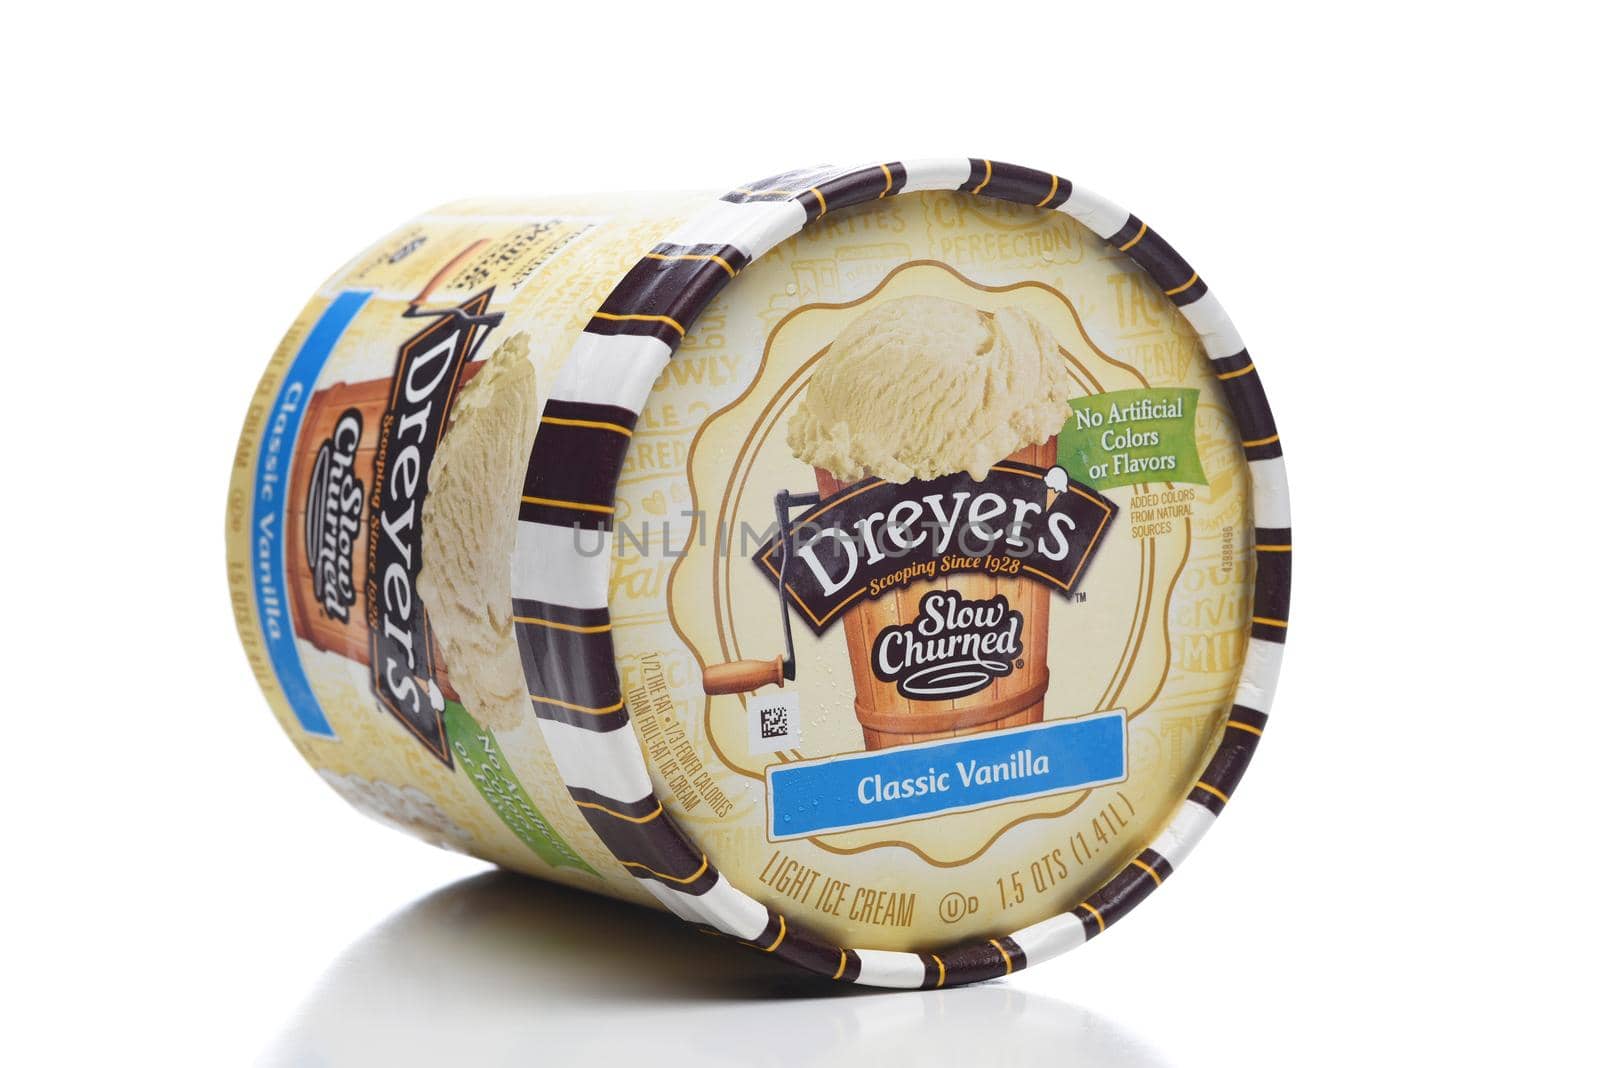 IRIVNE, CALIFORNIA - 4 JULY 2021: A Carton of Dreyers Slow Churned Classic Vanilla Ice Cream on its side. 